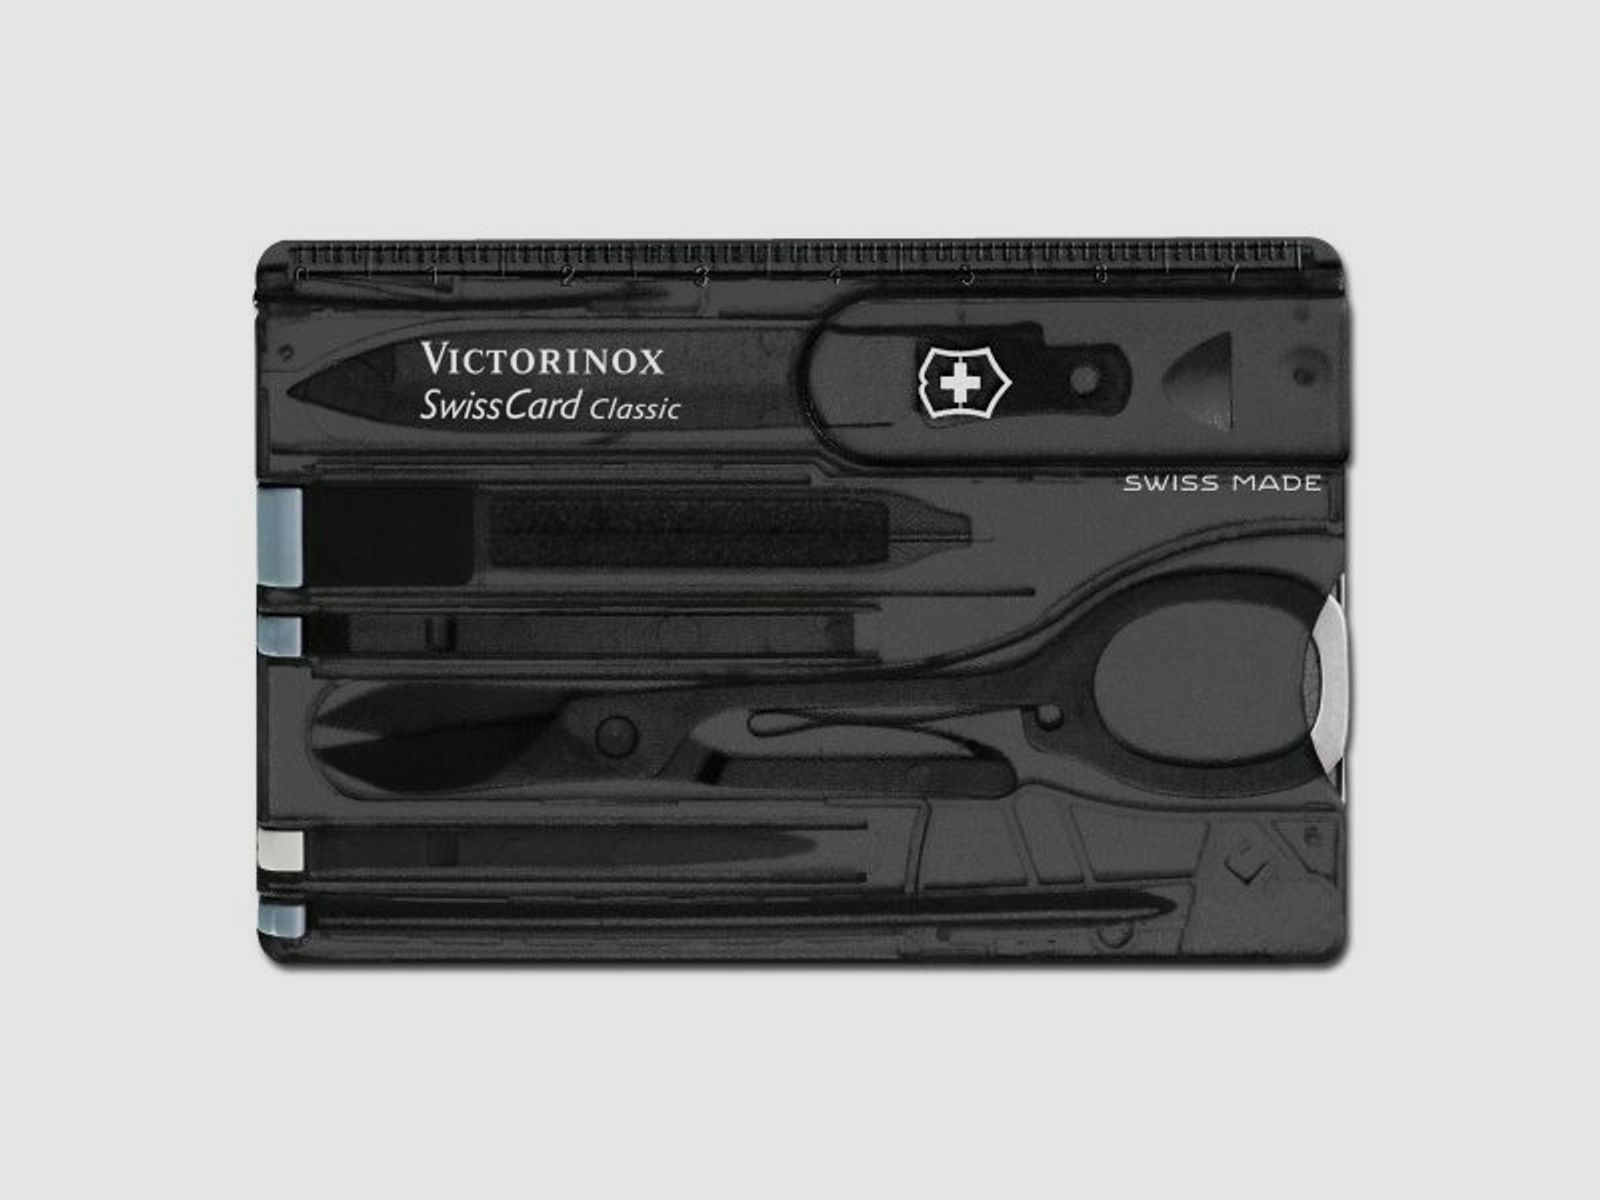 Victorinox Victorinox Multitool Swiss Card onyx